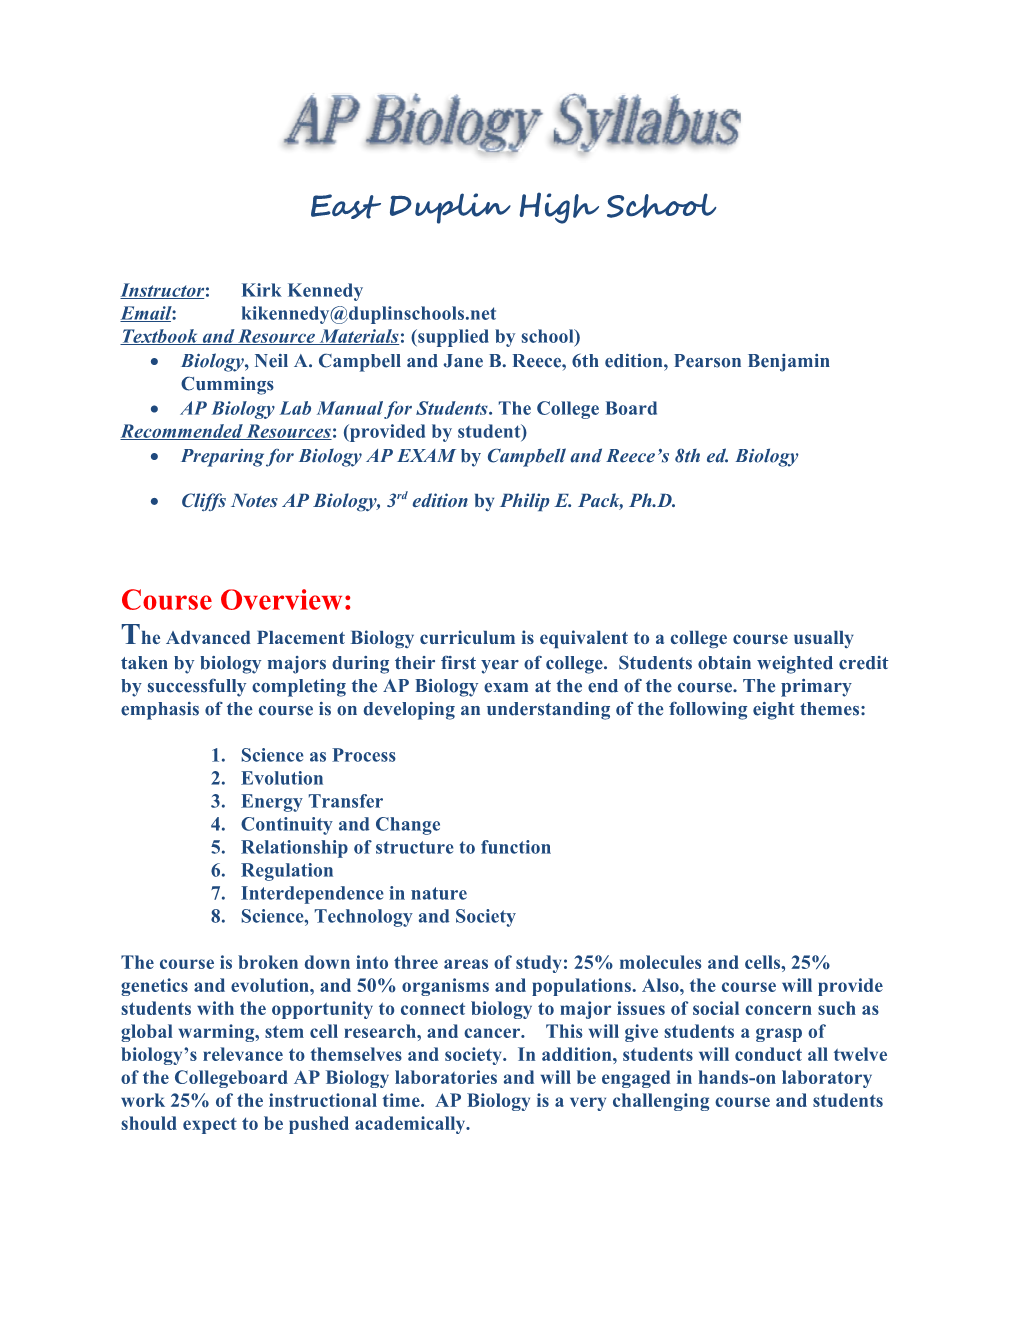 East Duplin High School